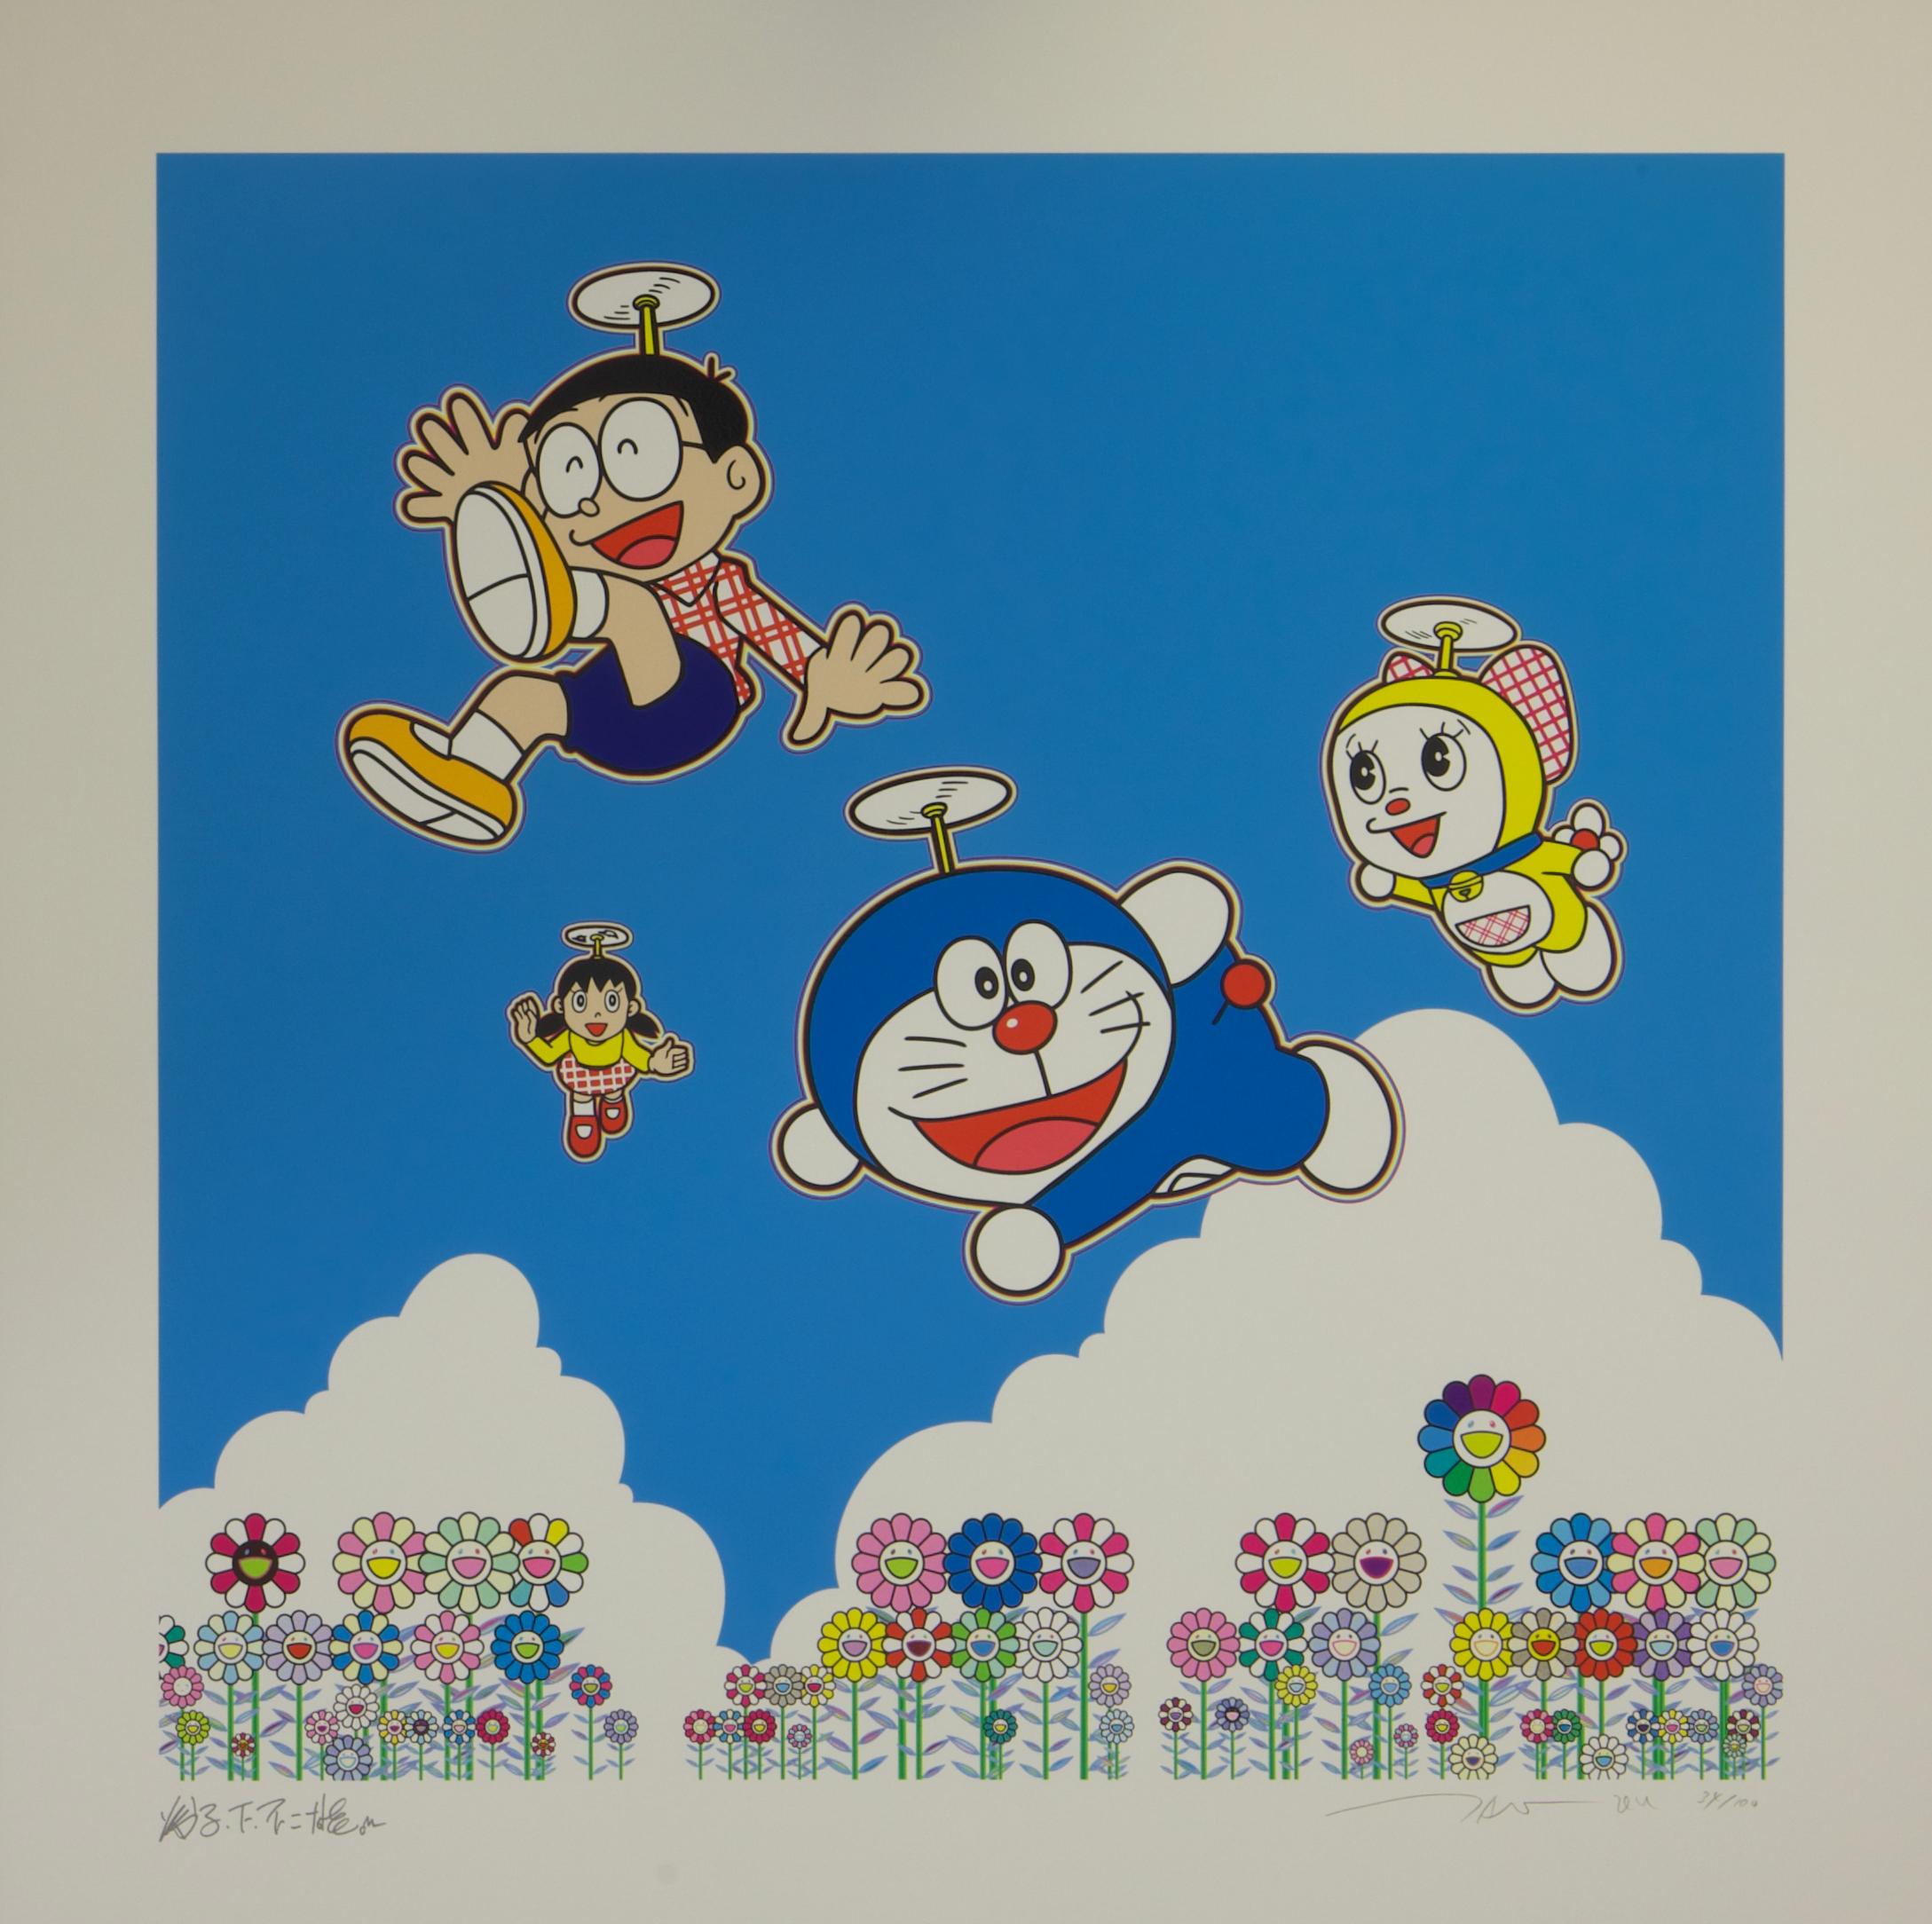 So Much Fun, Under the Blue Sky - Print by Takashi Murakami